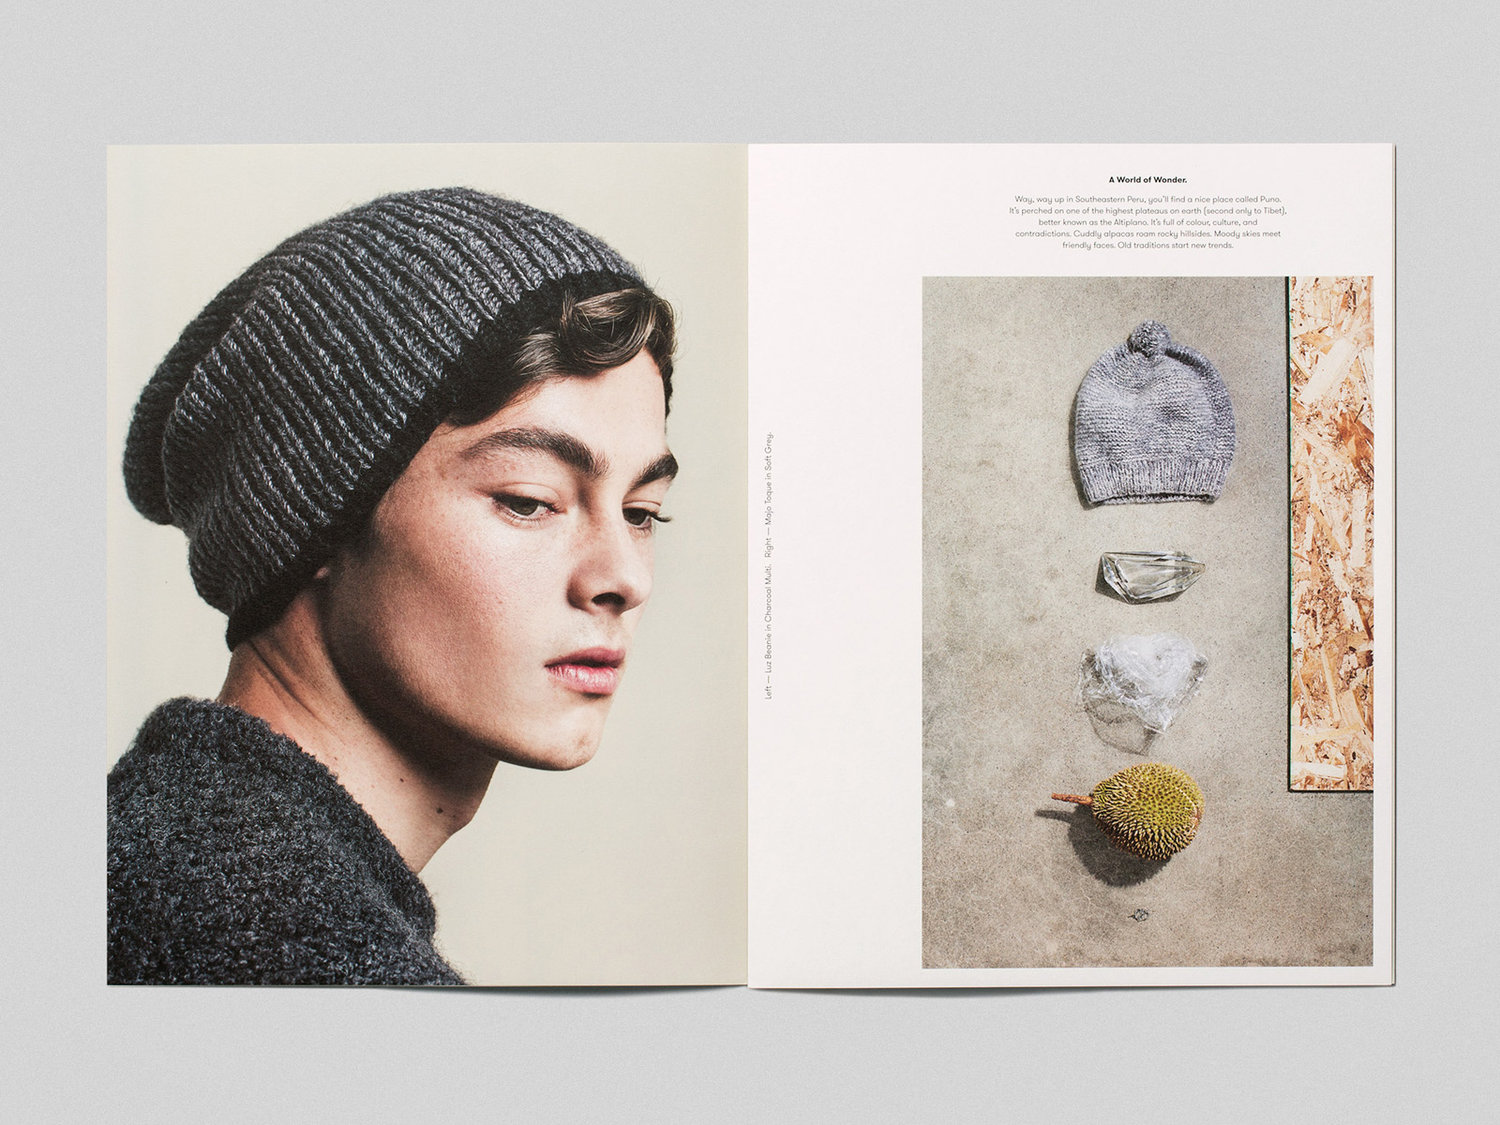 Lookbook and art direction by Toronto-based Leo Burnett Design for Peruvian handmade knitwear brand Qoñi